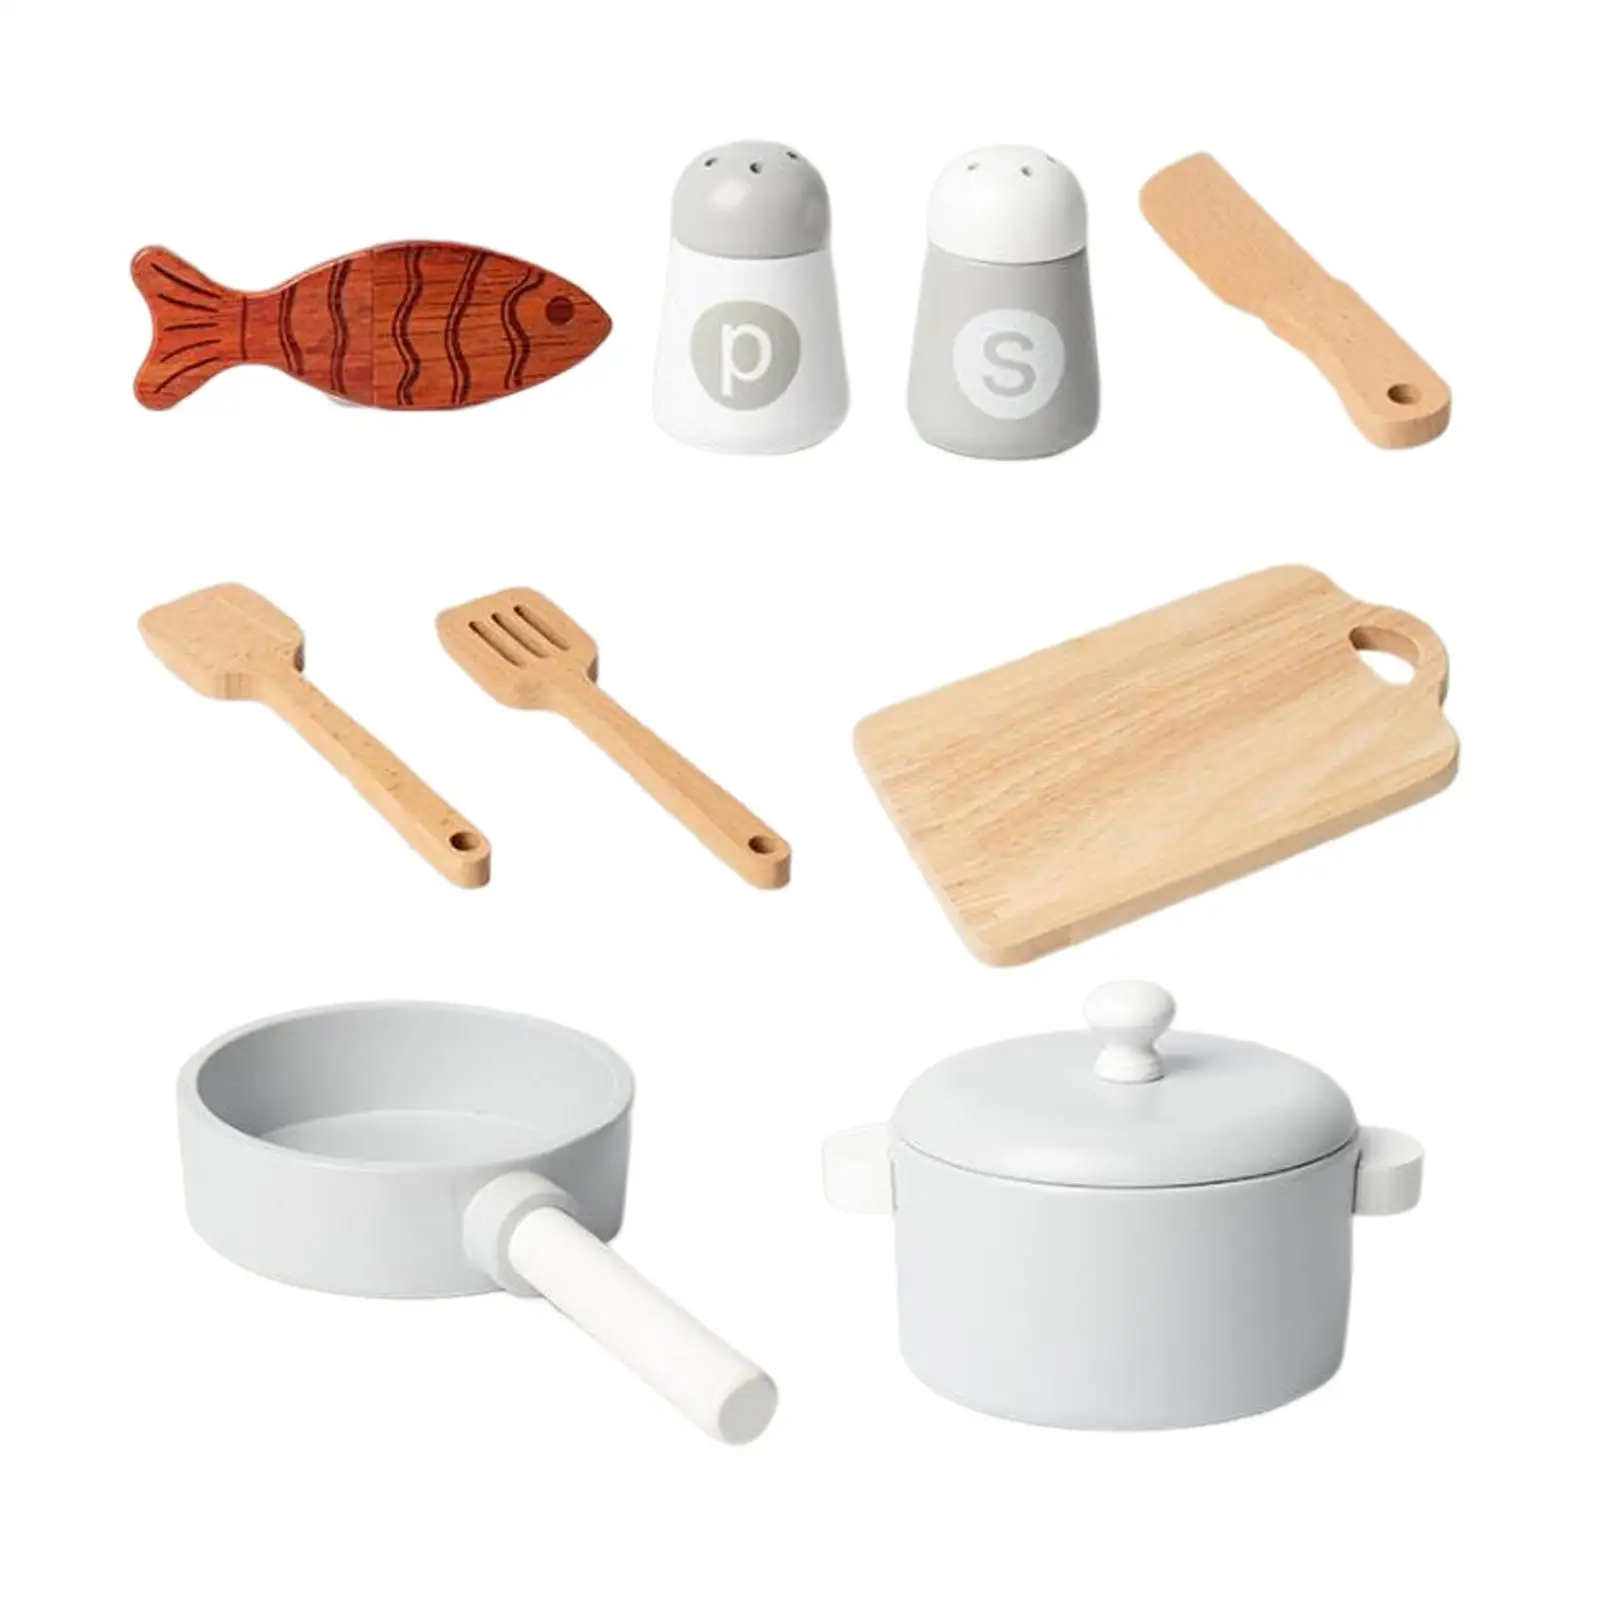 Kitchen Toyset Mini Pretend Play Wooden Toy Interest Development Accessories Kitchen Cookware Cooking toys for kitchen